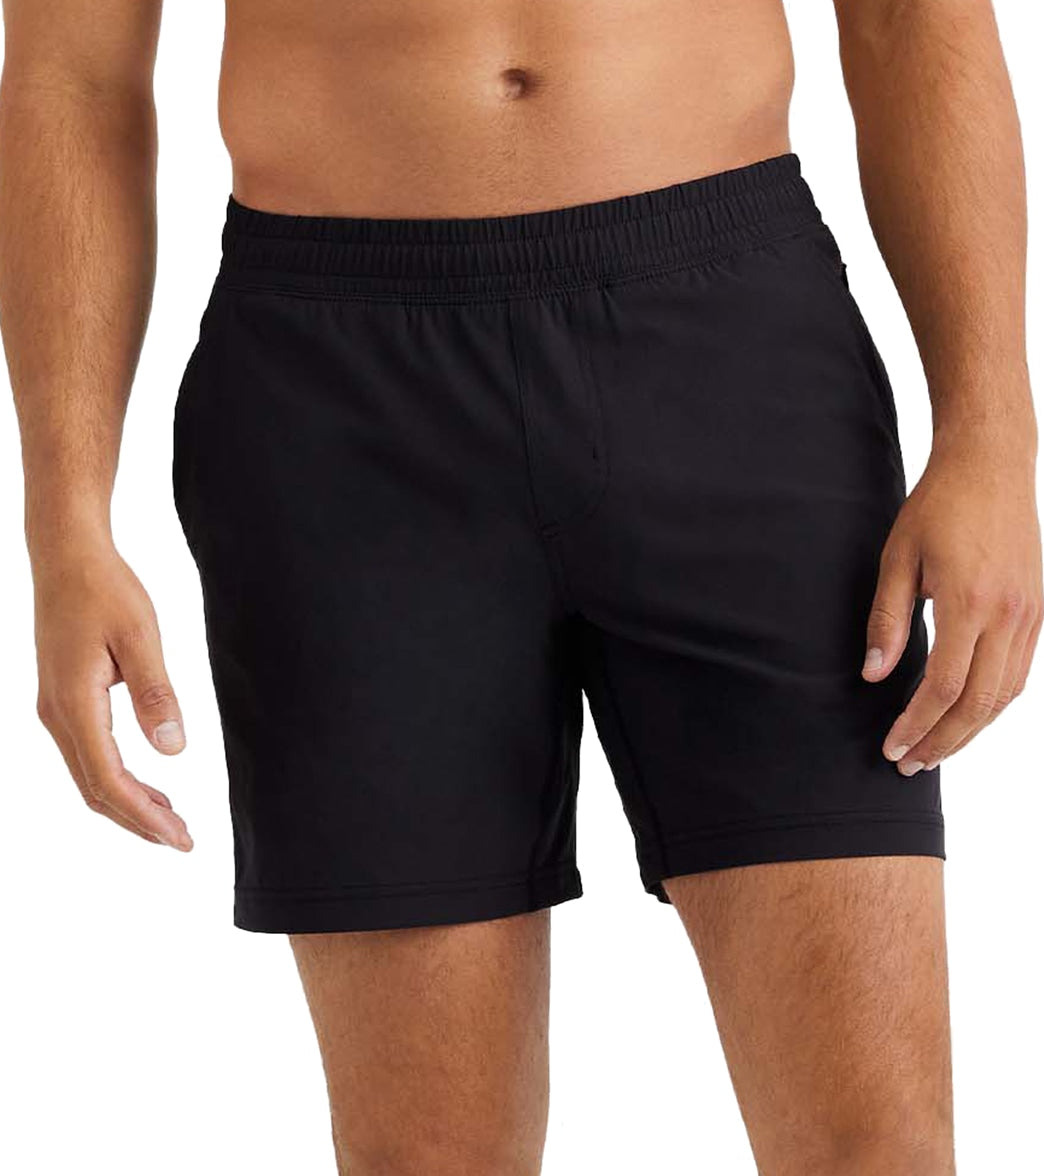 Spandex shorts for Men, Hot yoga shorts